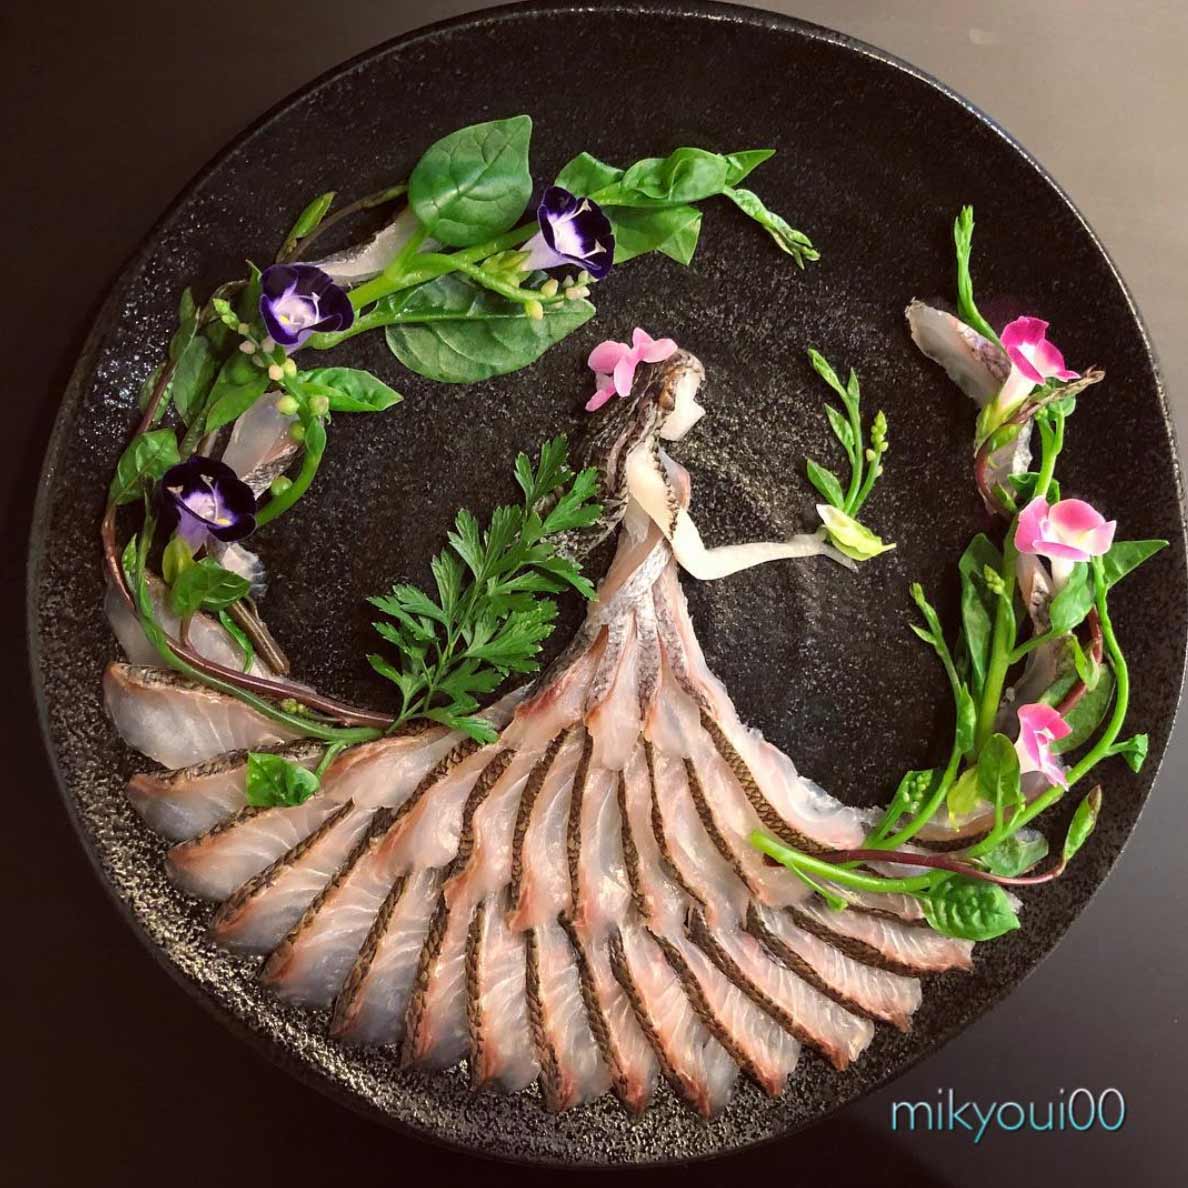 Wundervolle Sashimi-Kunstwerke von mikyou